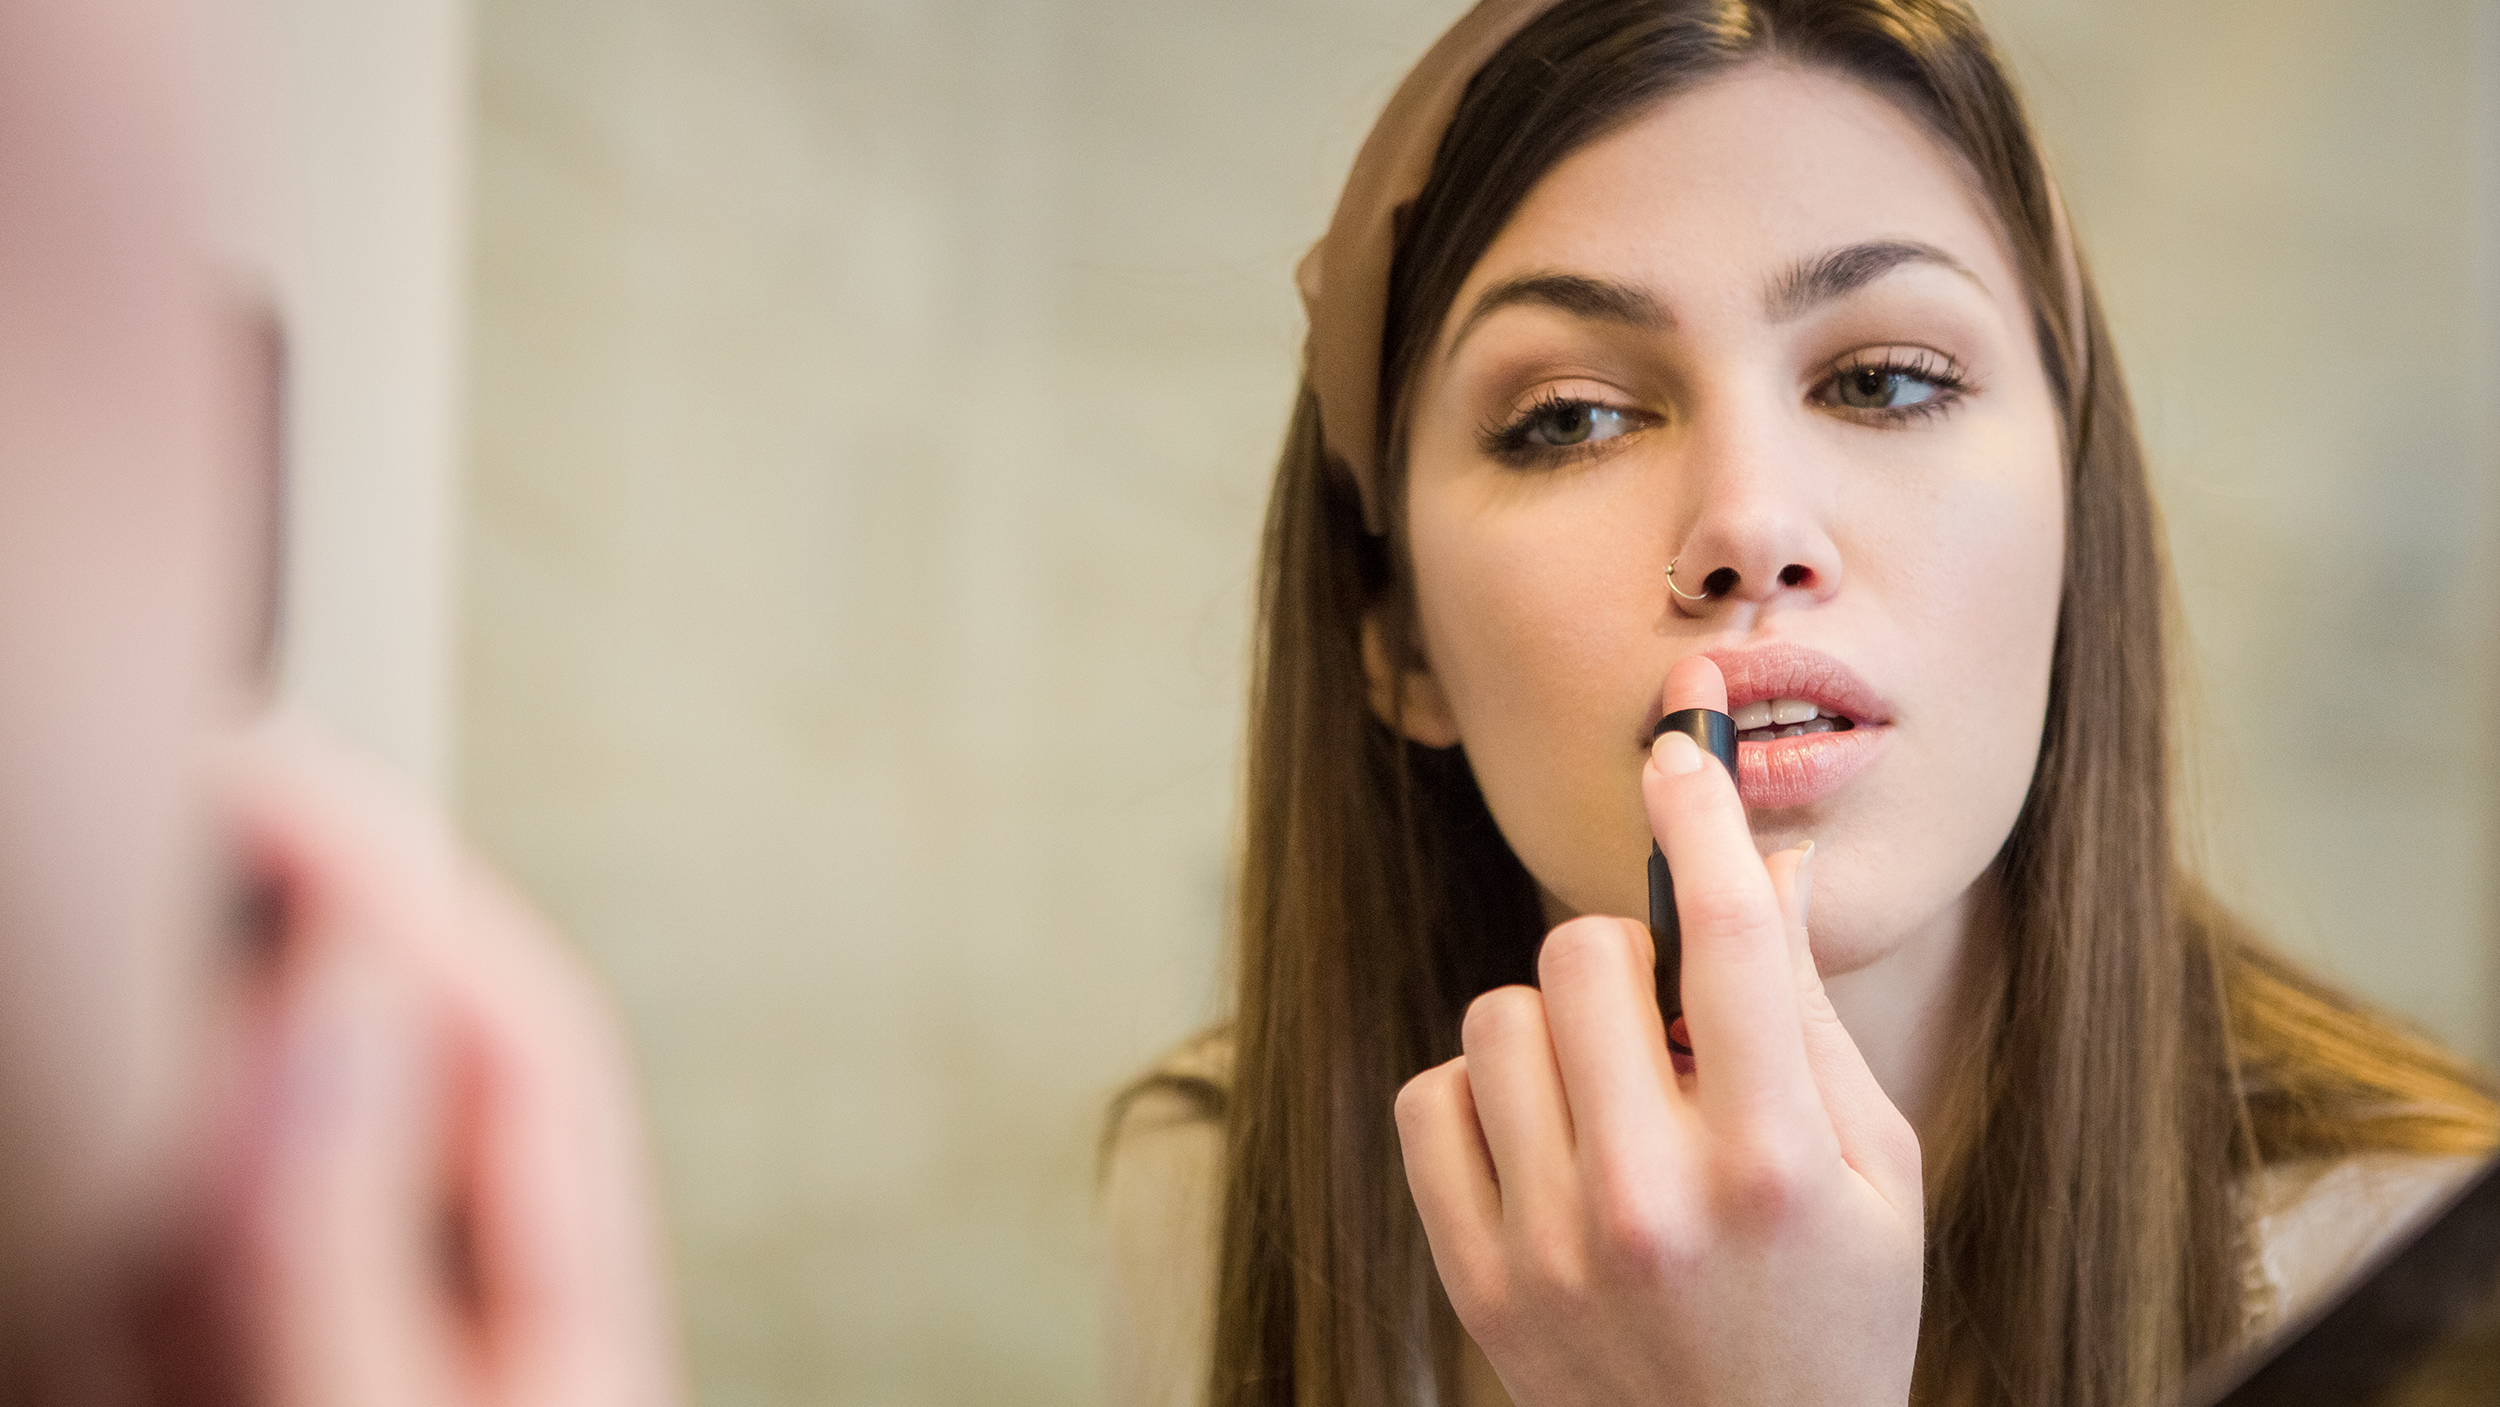 What happens when makeup expires?